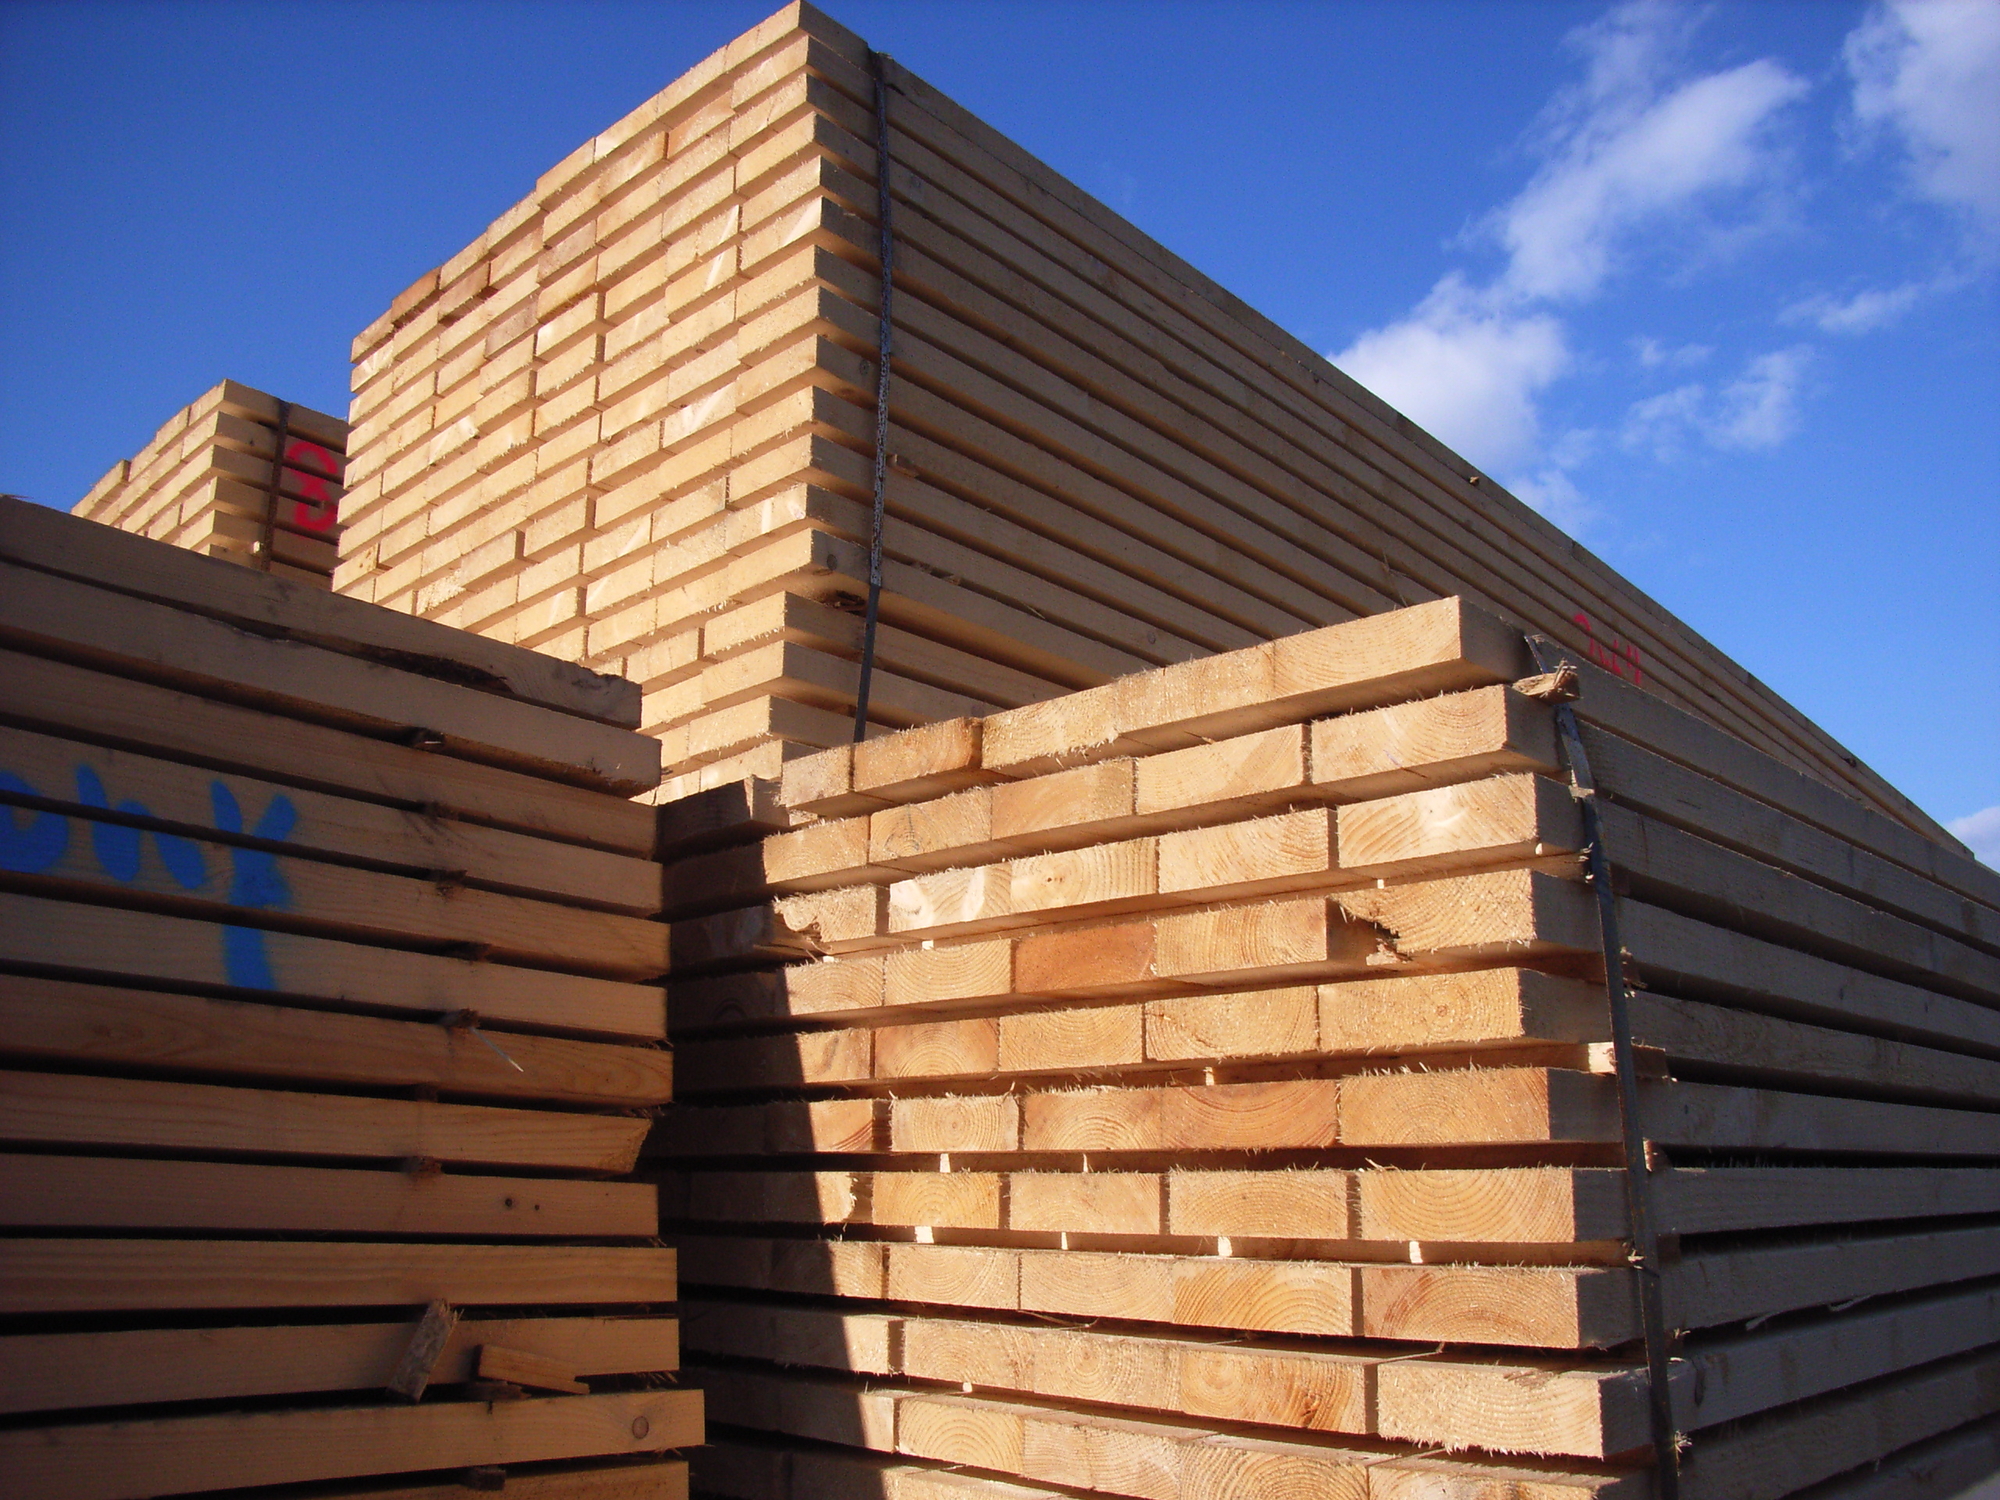 Stacks of timber supplies